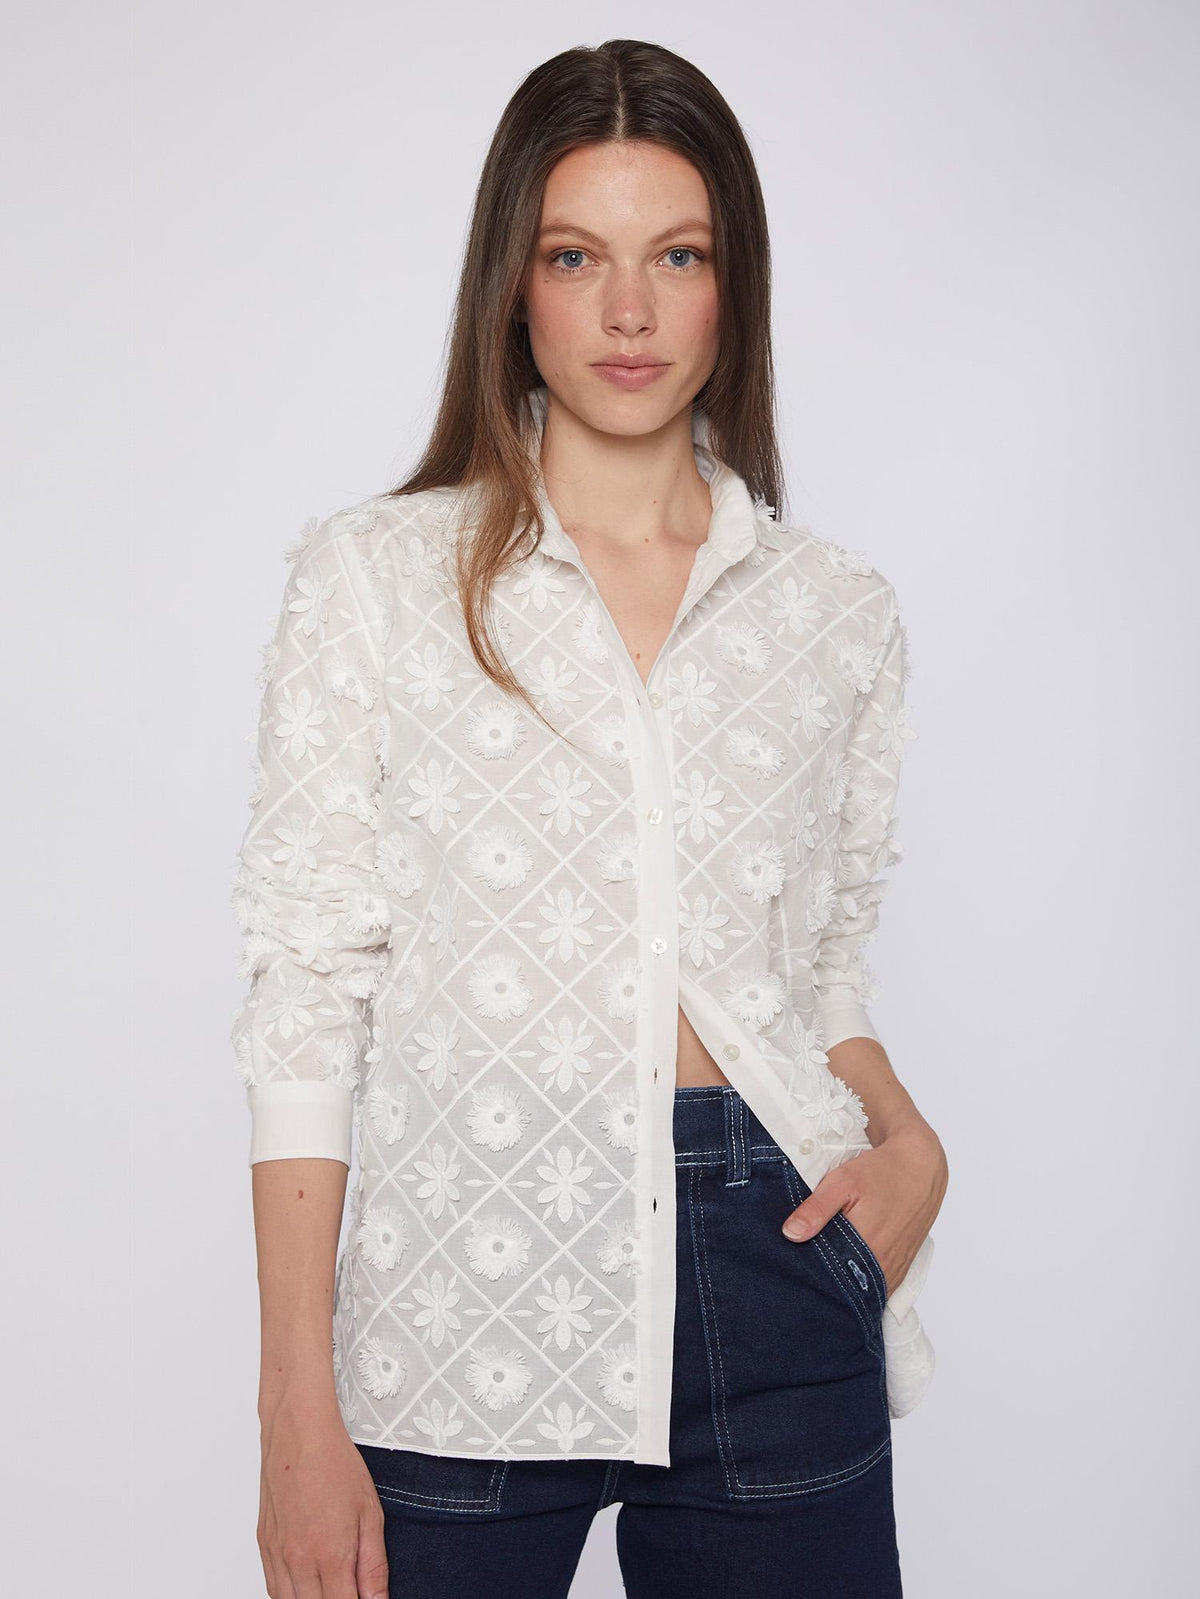 Sksloeg Womens Tops Spring Sunflower Printed Short Sleeve Tunic Shirt  Casual Loose V-Neck Plain Blouses,Gray XXXL 